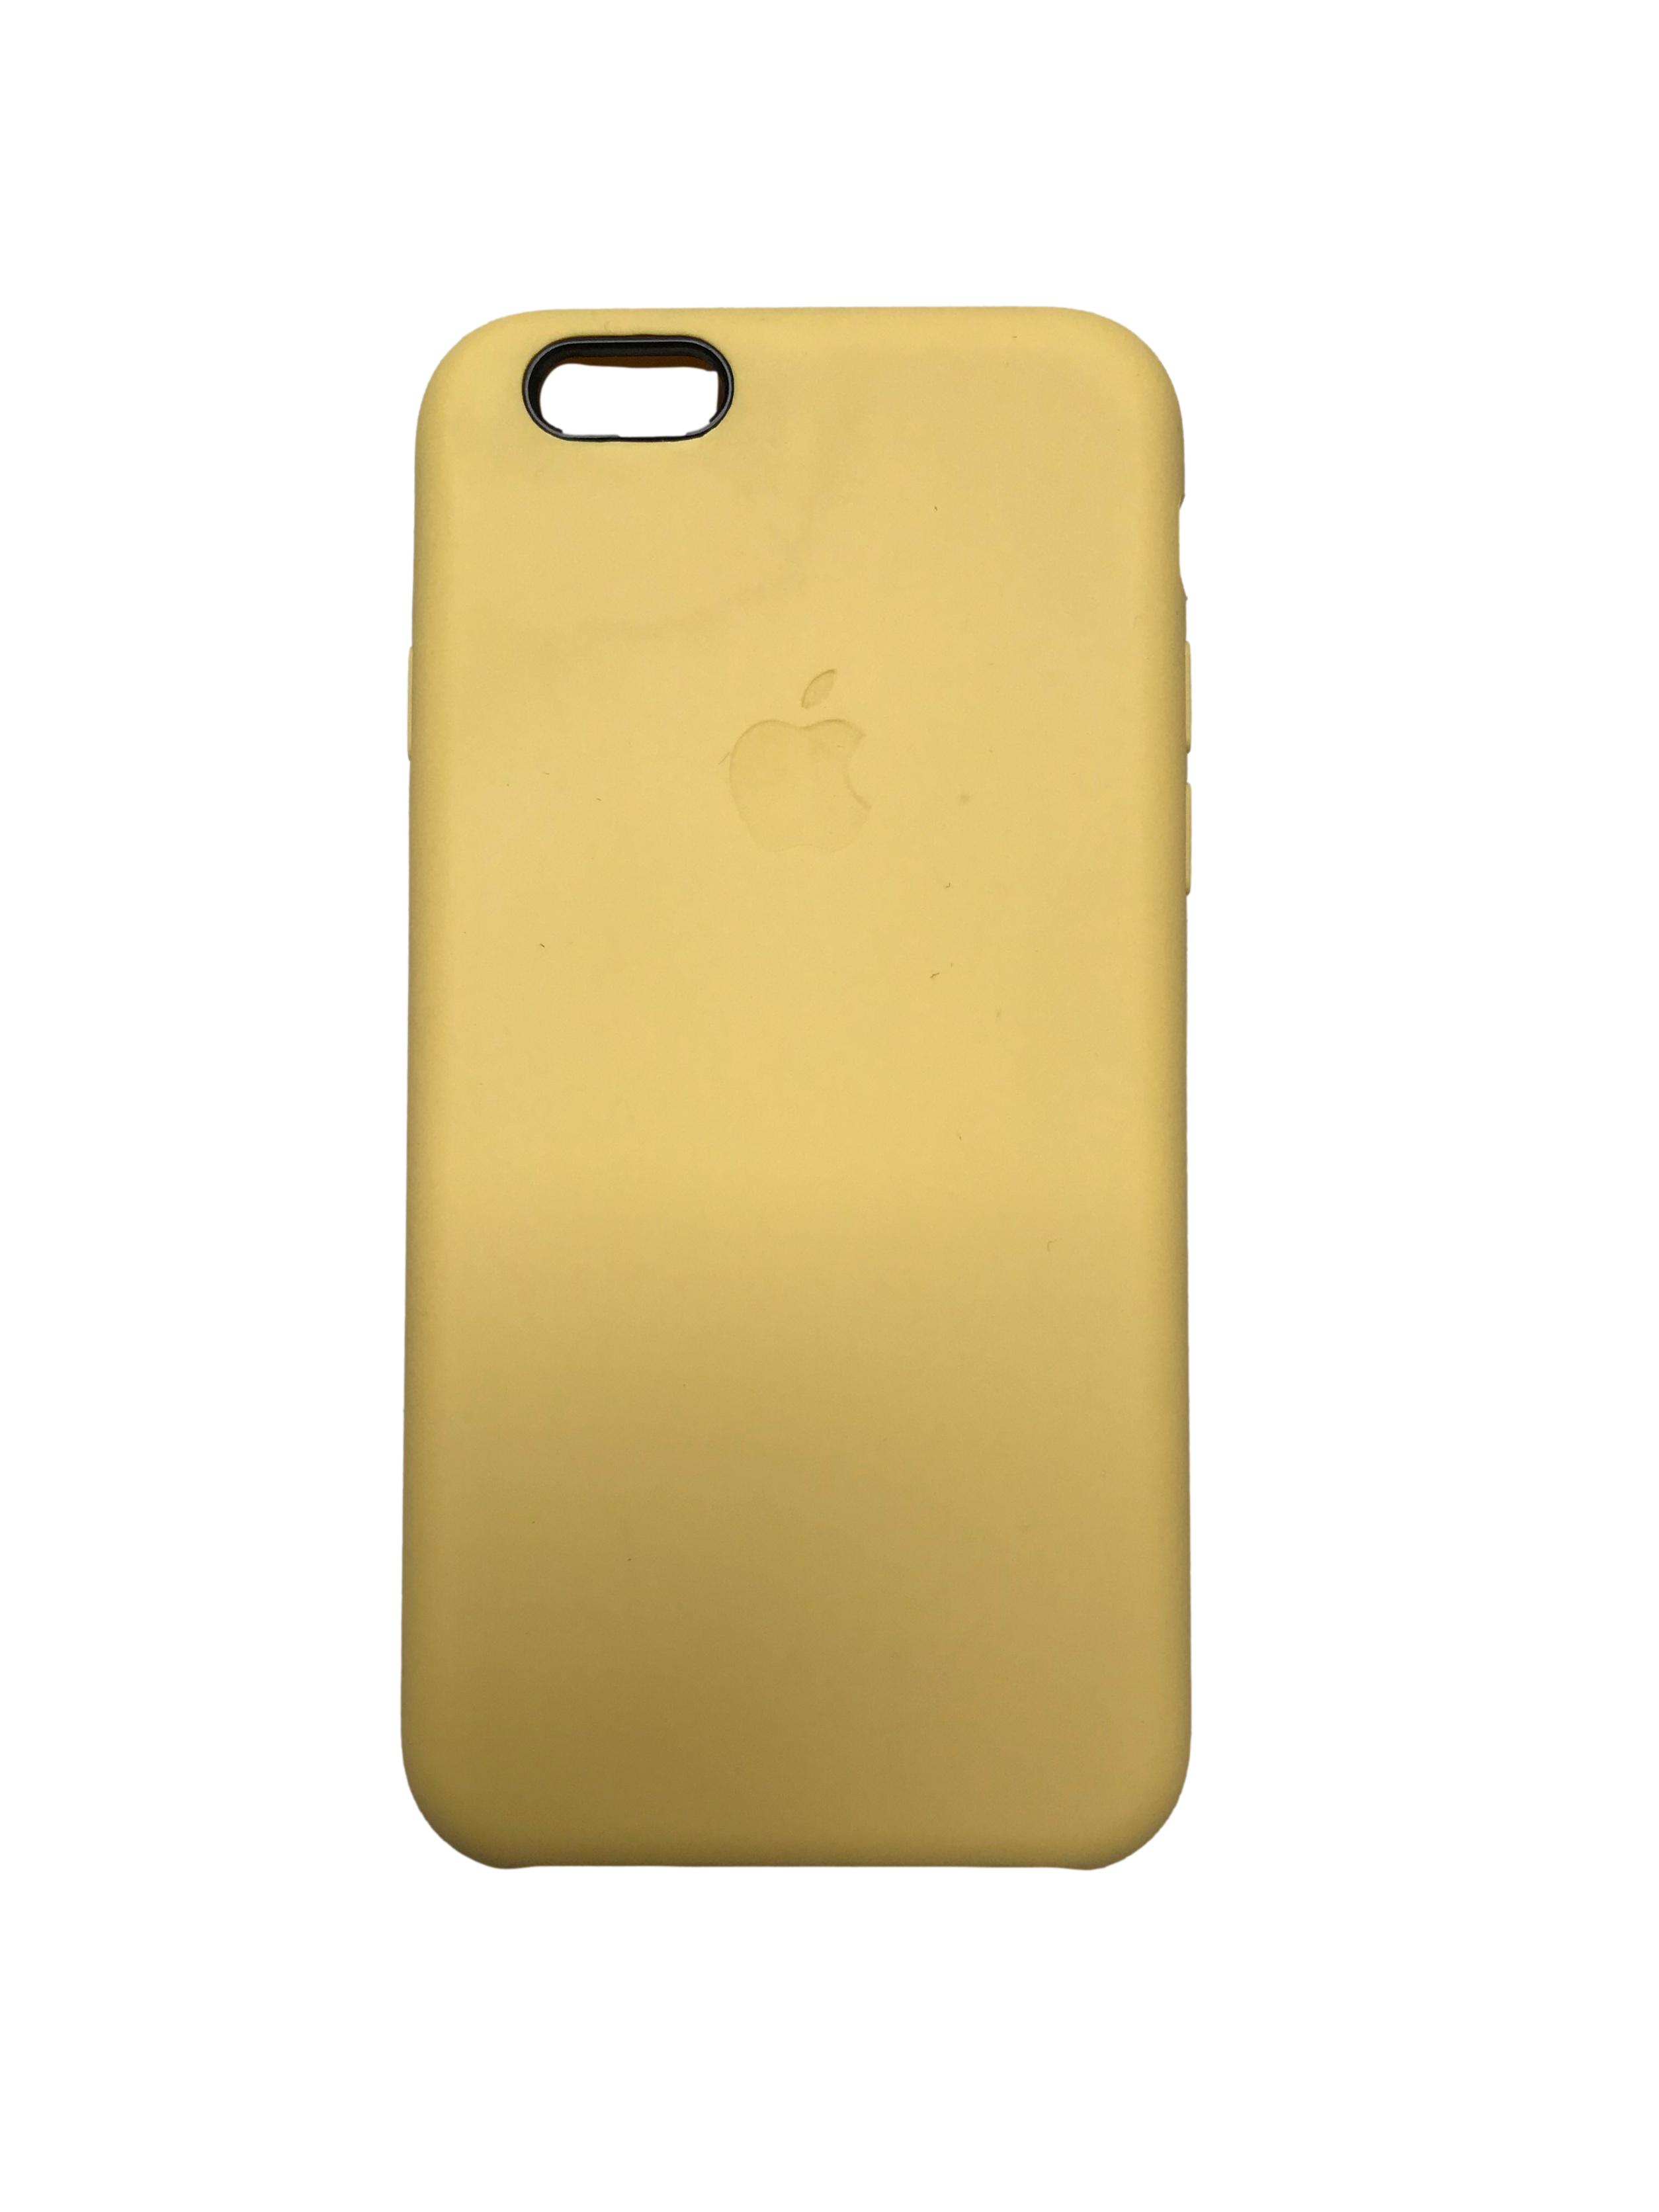 Case Iphone de silicona amarillla con interior agamuzado. Para iPhone 6 / 6s / 7 / 8 / SE